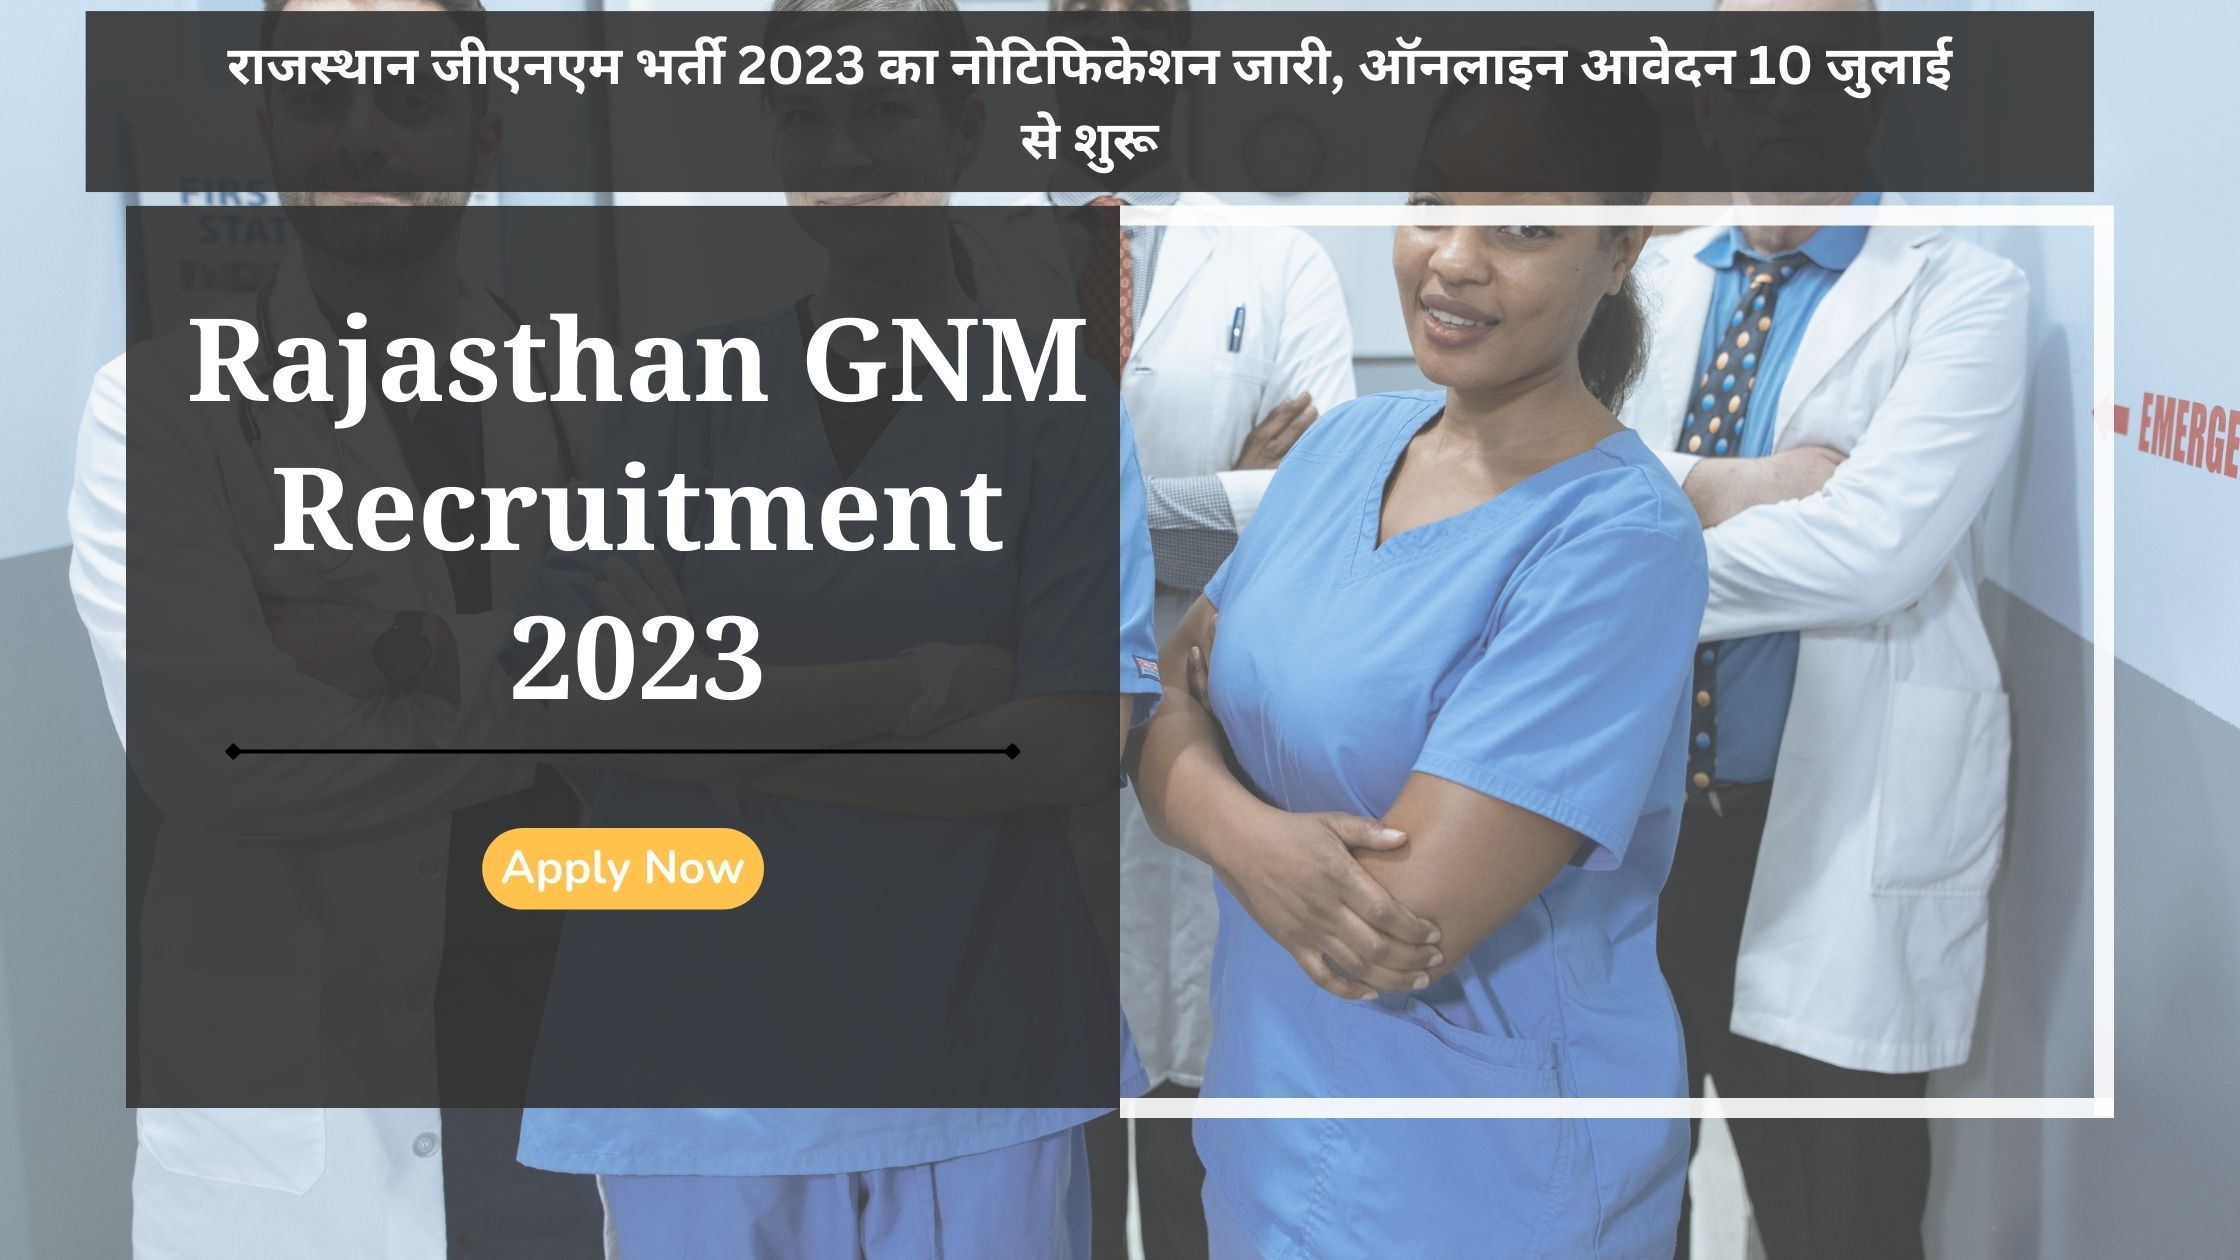 Rajasthan GNM Recruitment 2023